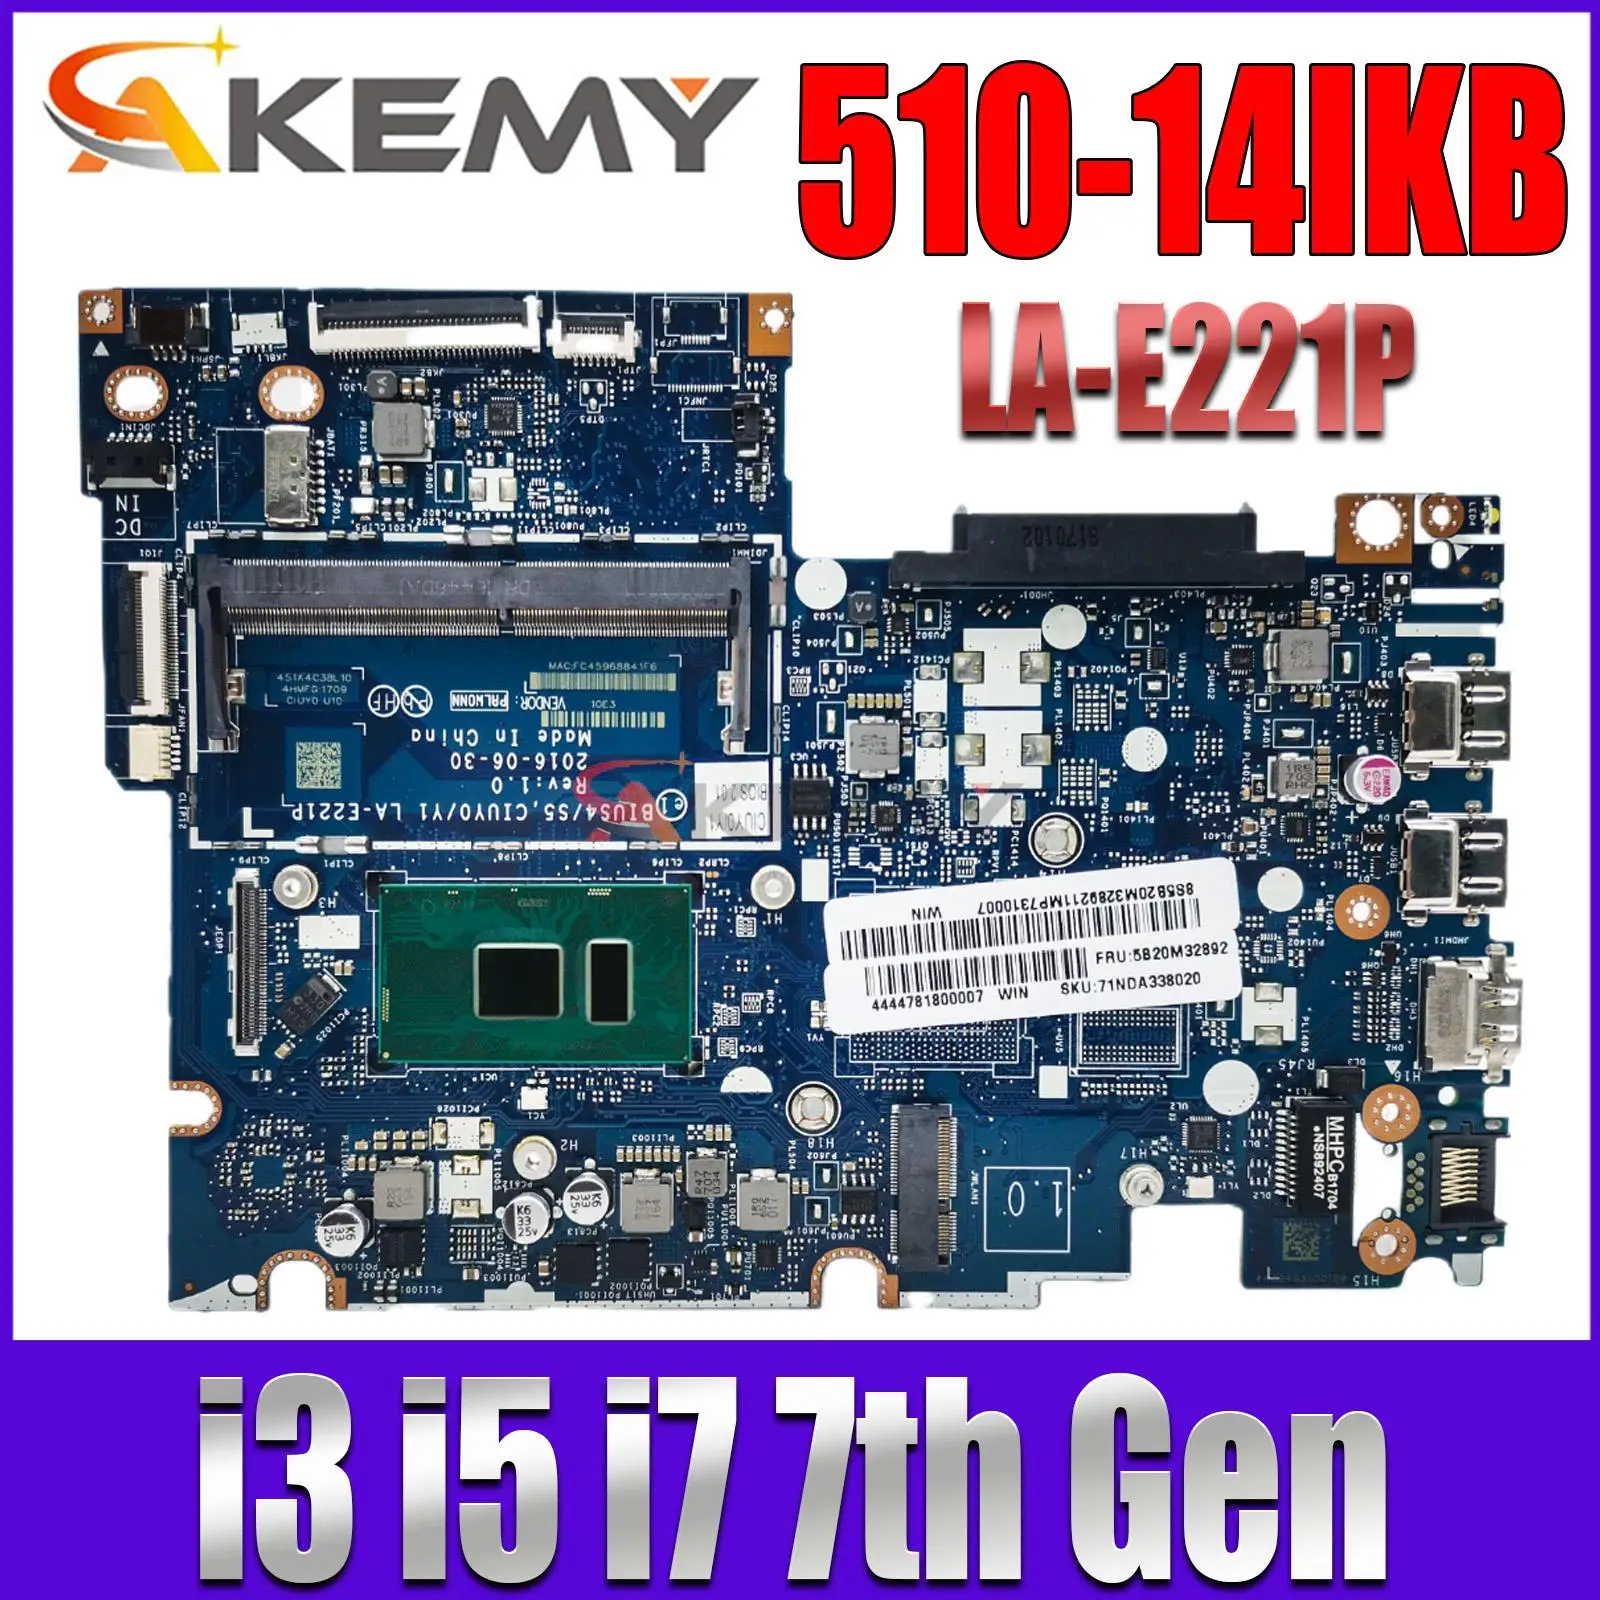 

LA-E221P Motherboard.For Lenovo Yoga 510-14IKB Flex 4-1480 Notebook Motherboard With i3 i5 i7 7th Gen CPU